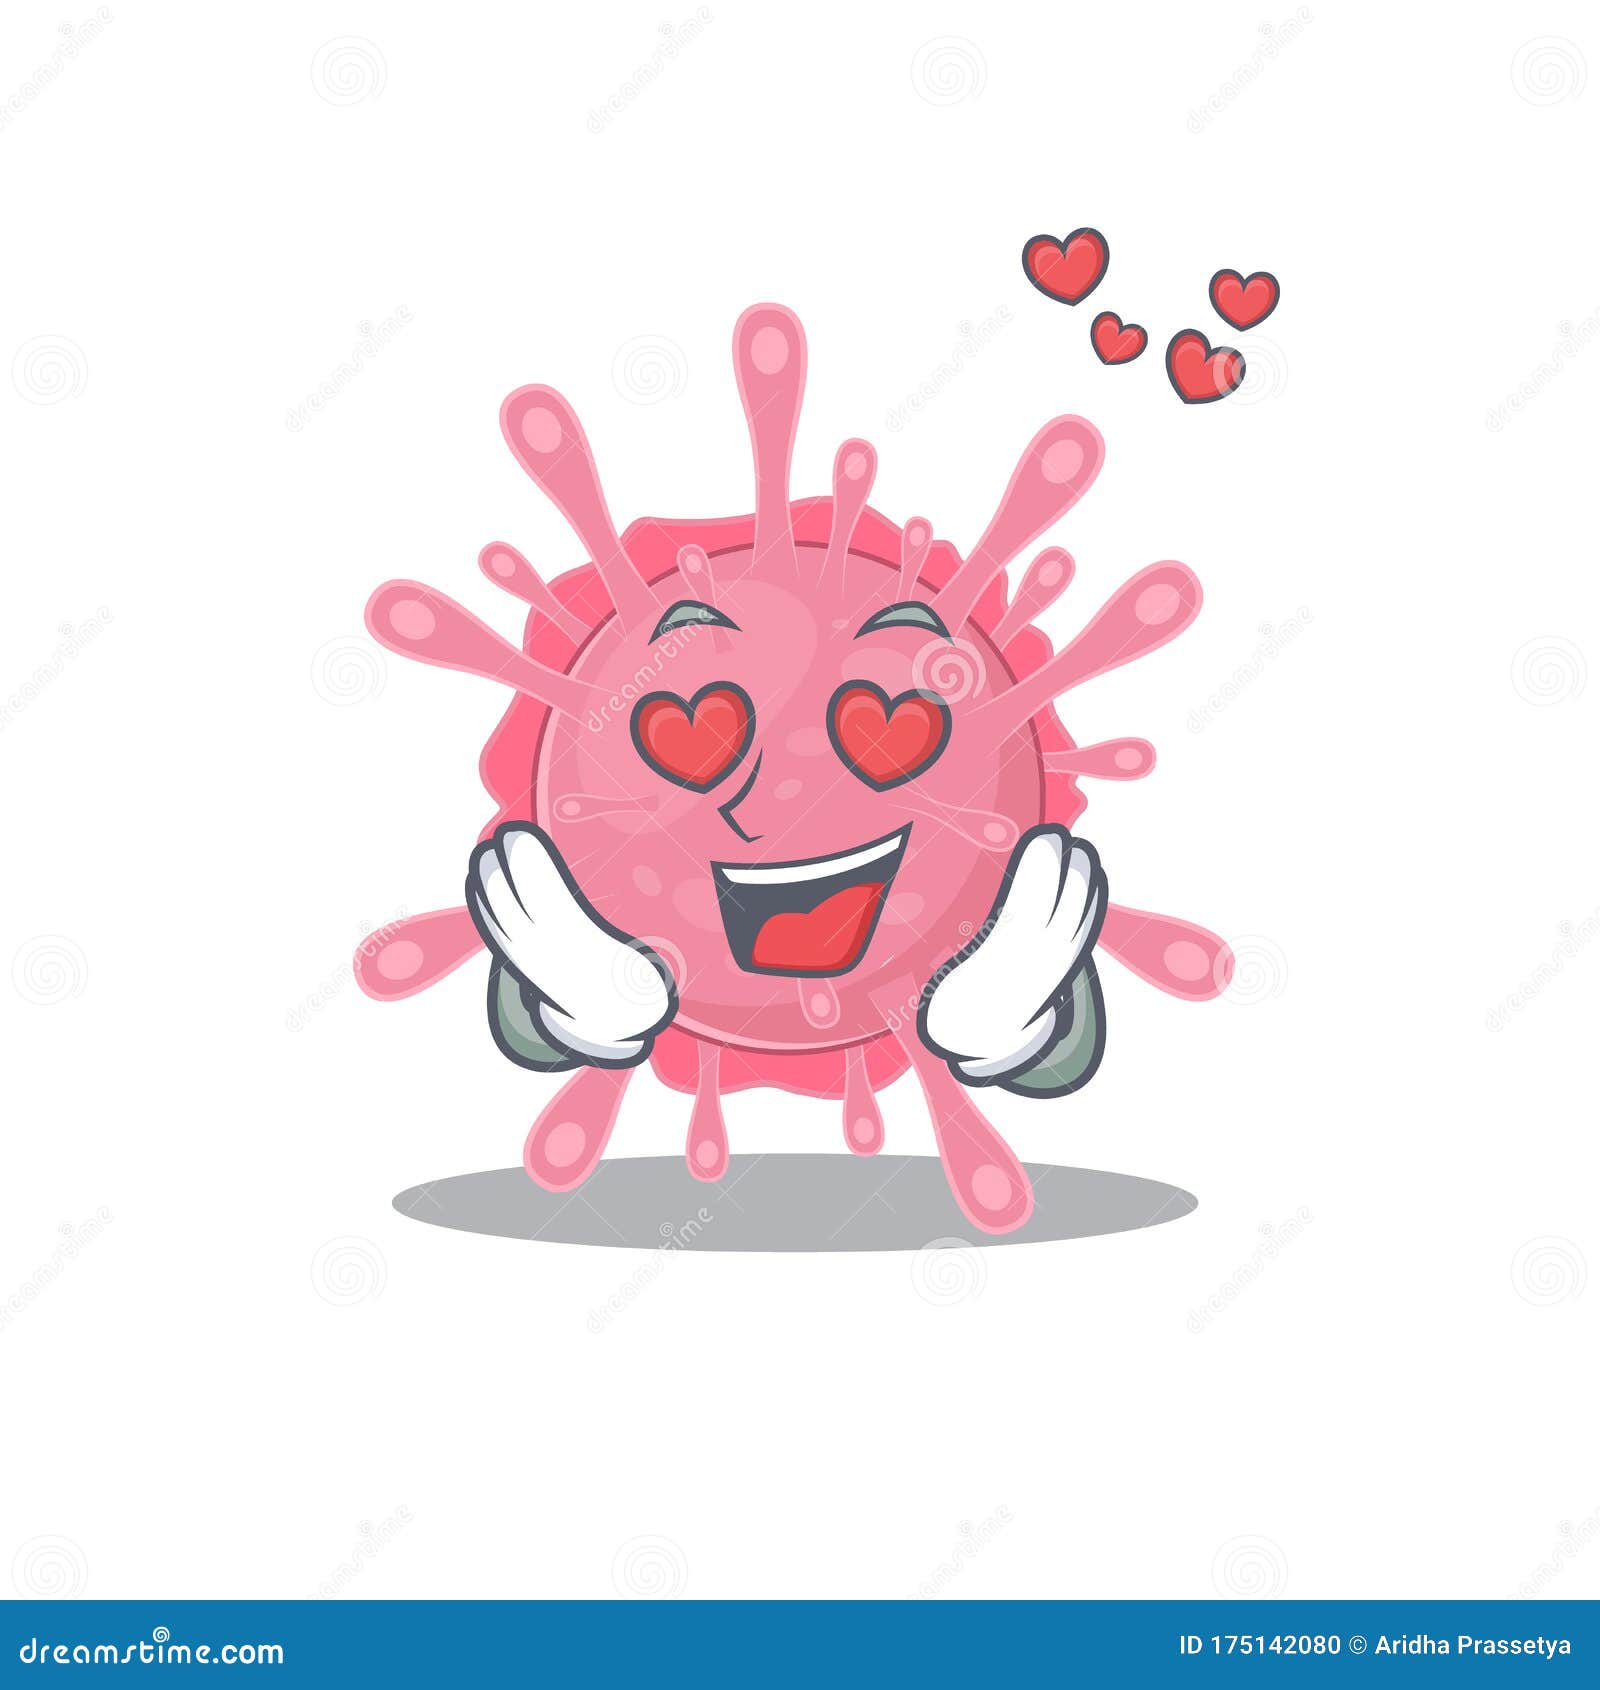 Cute Corona Virus Germ Cartoon Character Showing a Falling in Love Face ...